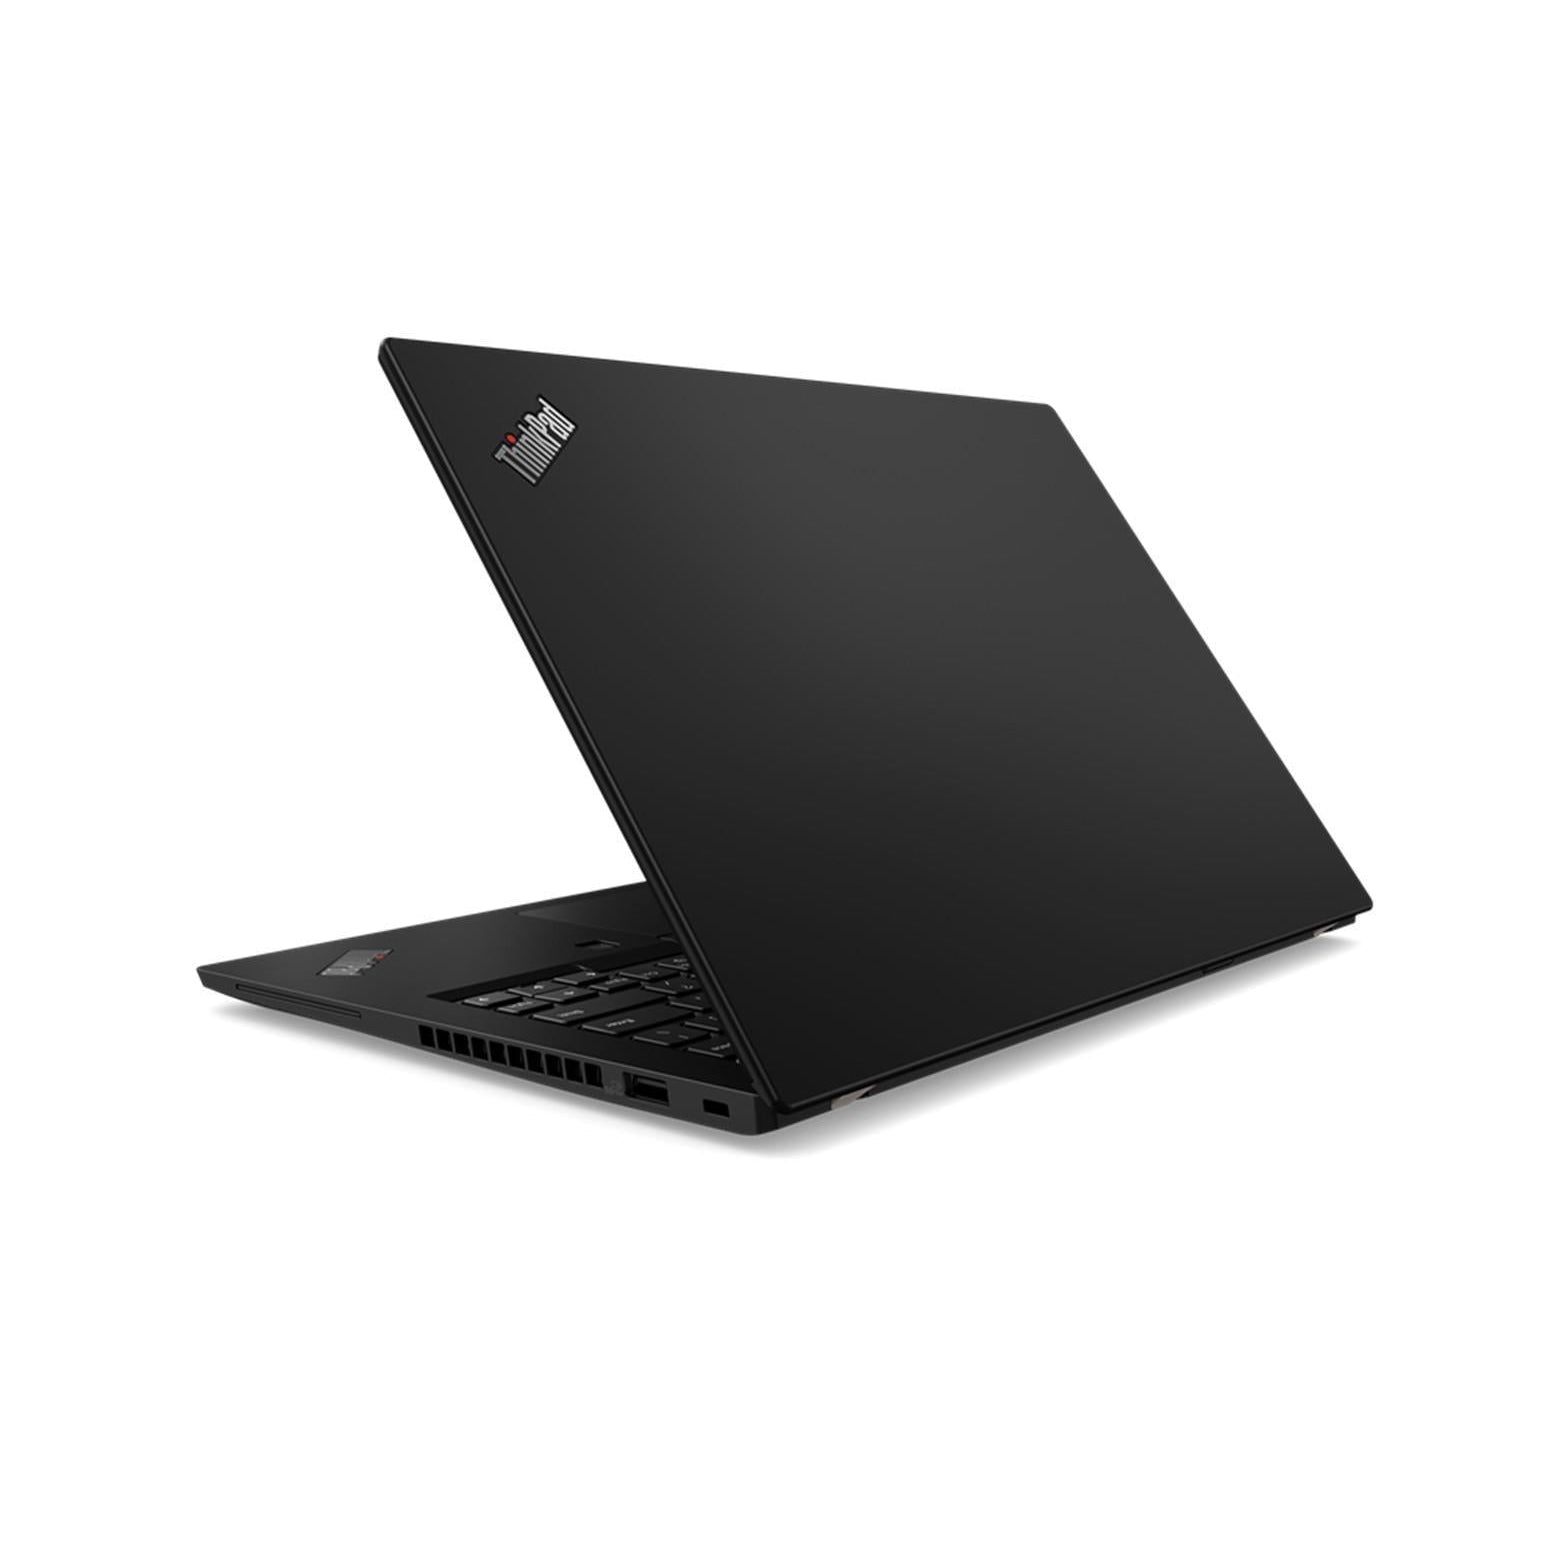 Lenovo ThinkPad 13 2nd Gen, Intel i5, 128GB, Black - Excellent